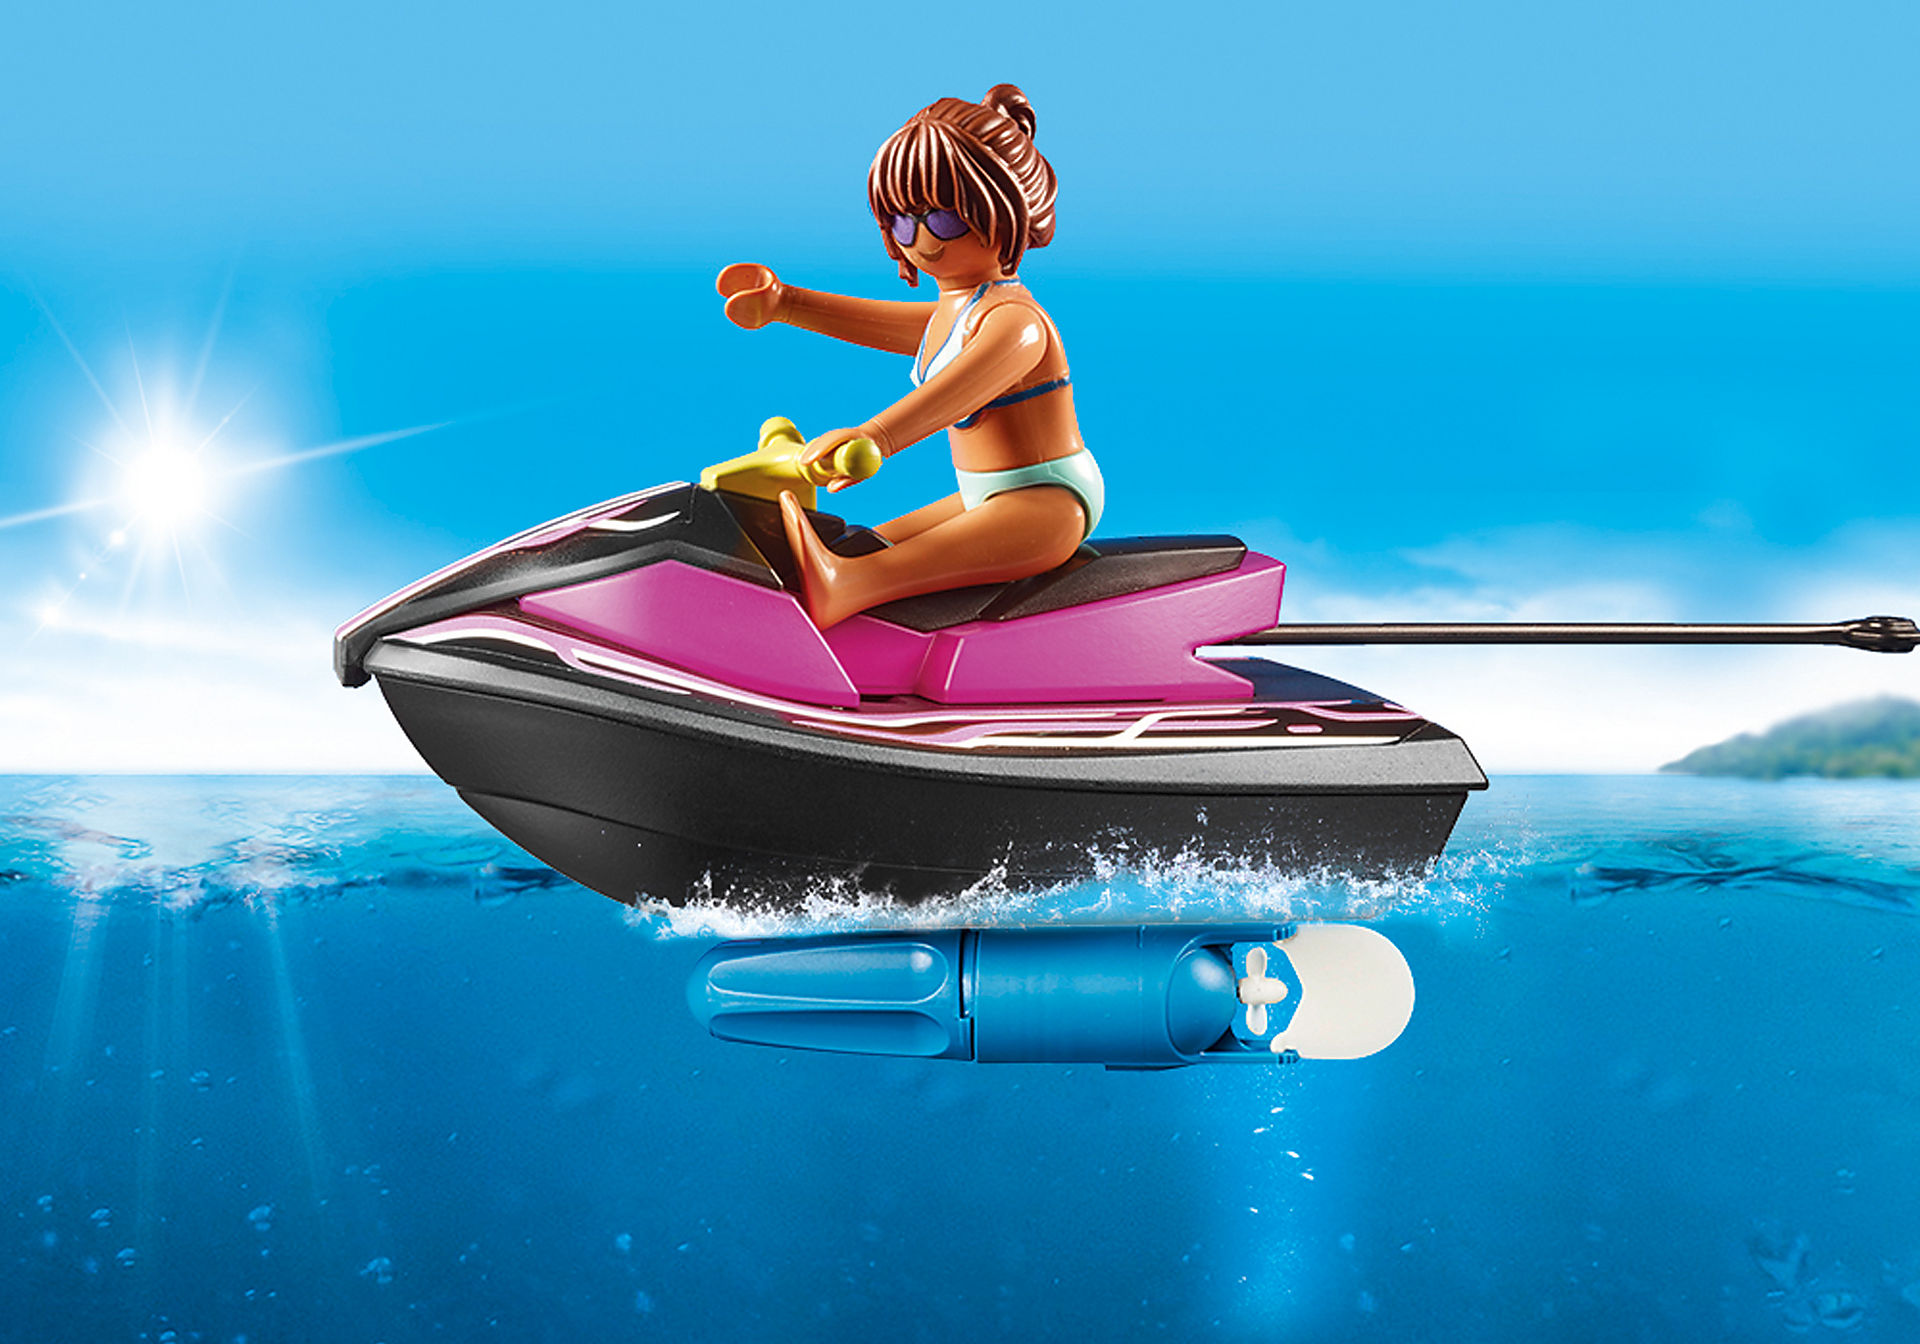 70906 Starter Pack Moto d'acqua con banana boat  zoom image4